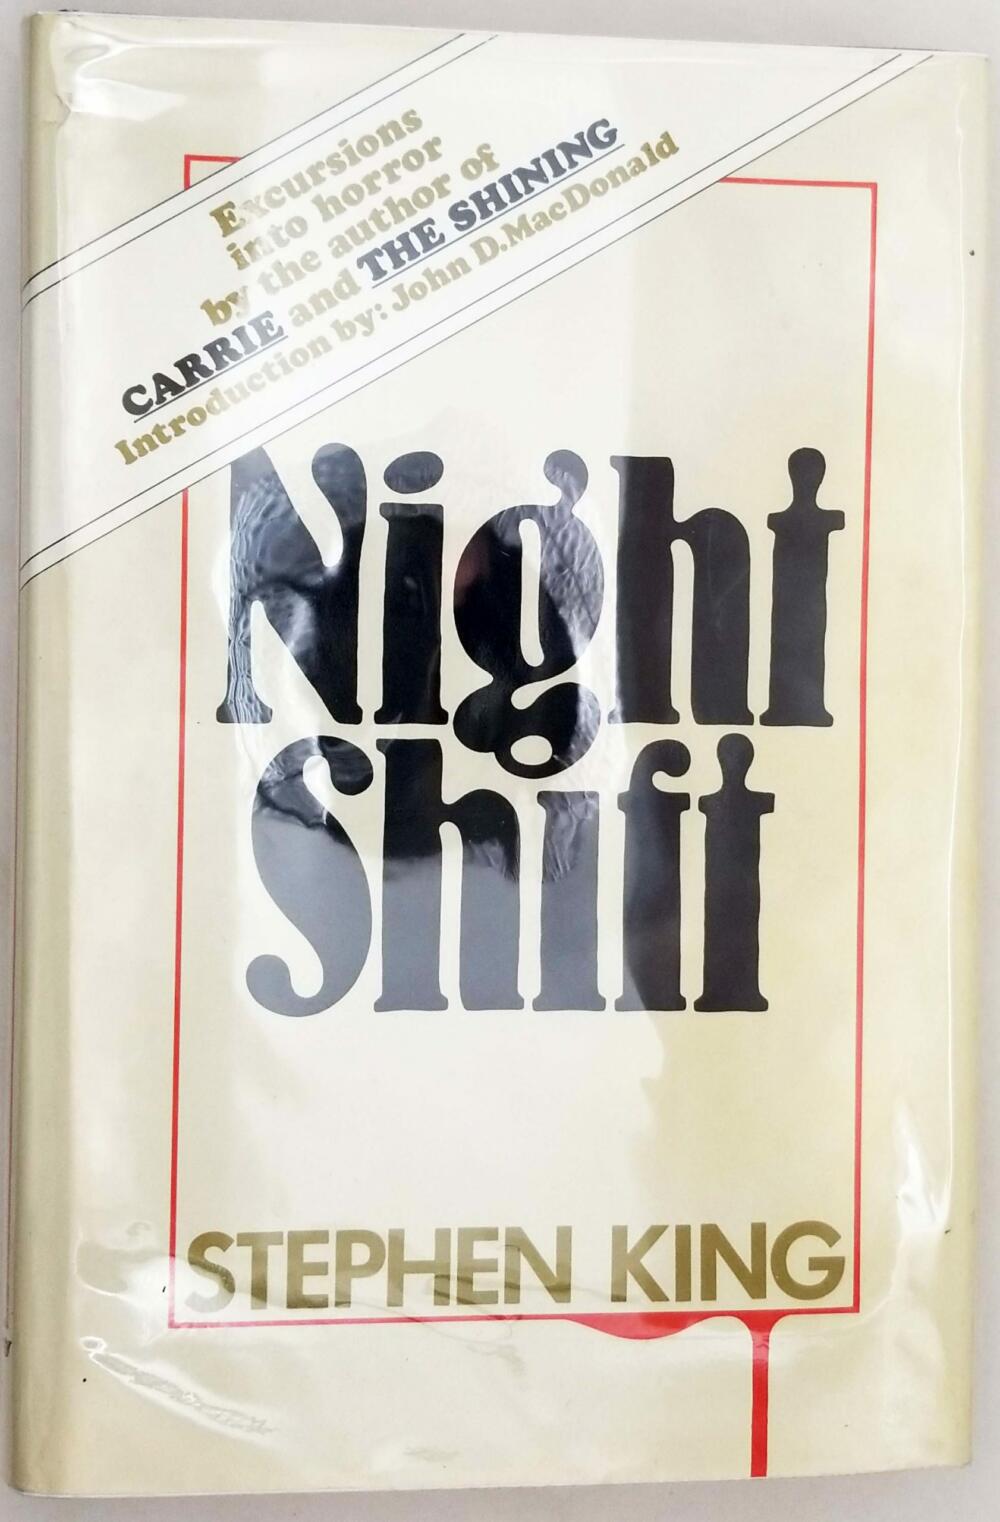 Night Shift - Stephen King 1978 BCE